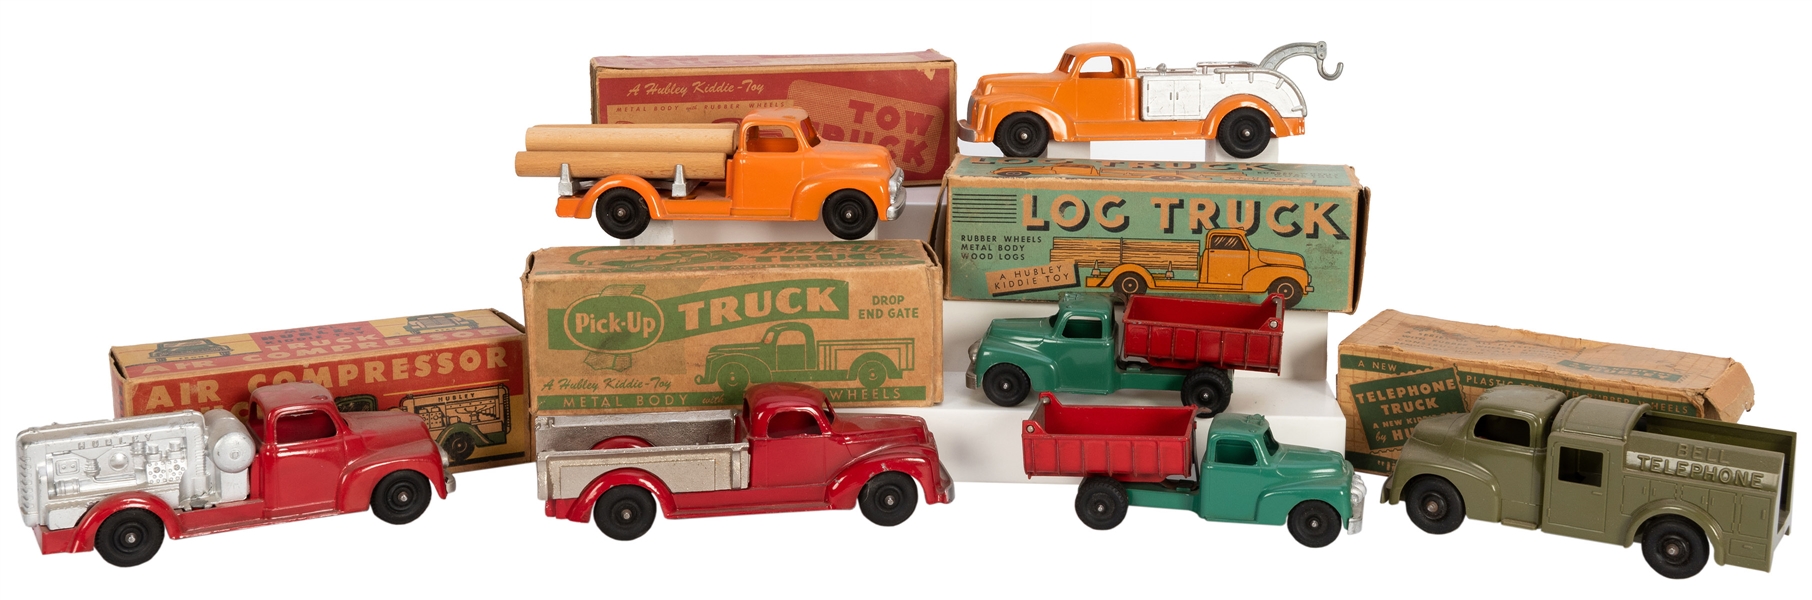 Lot of Hubley Kiddie Toy Trucks.